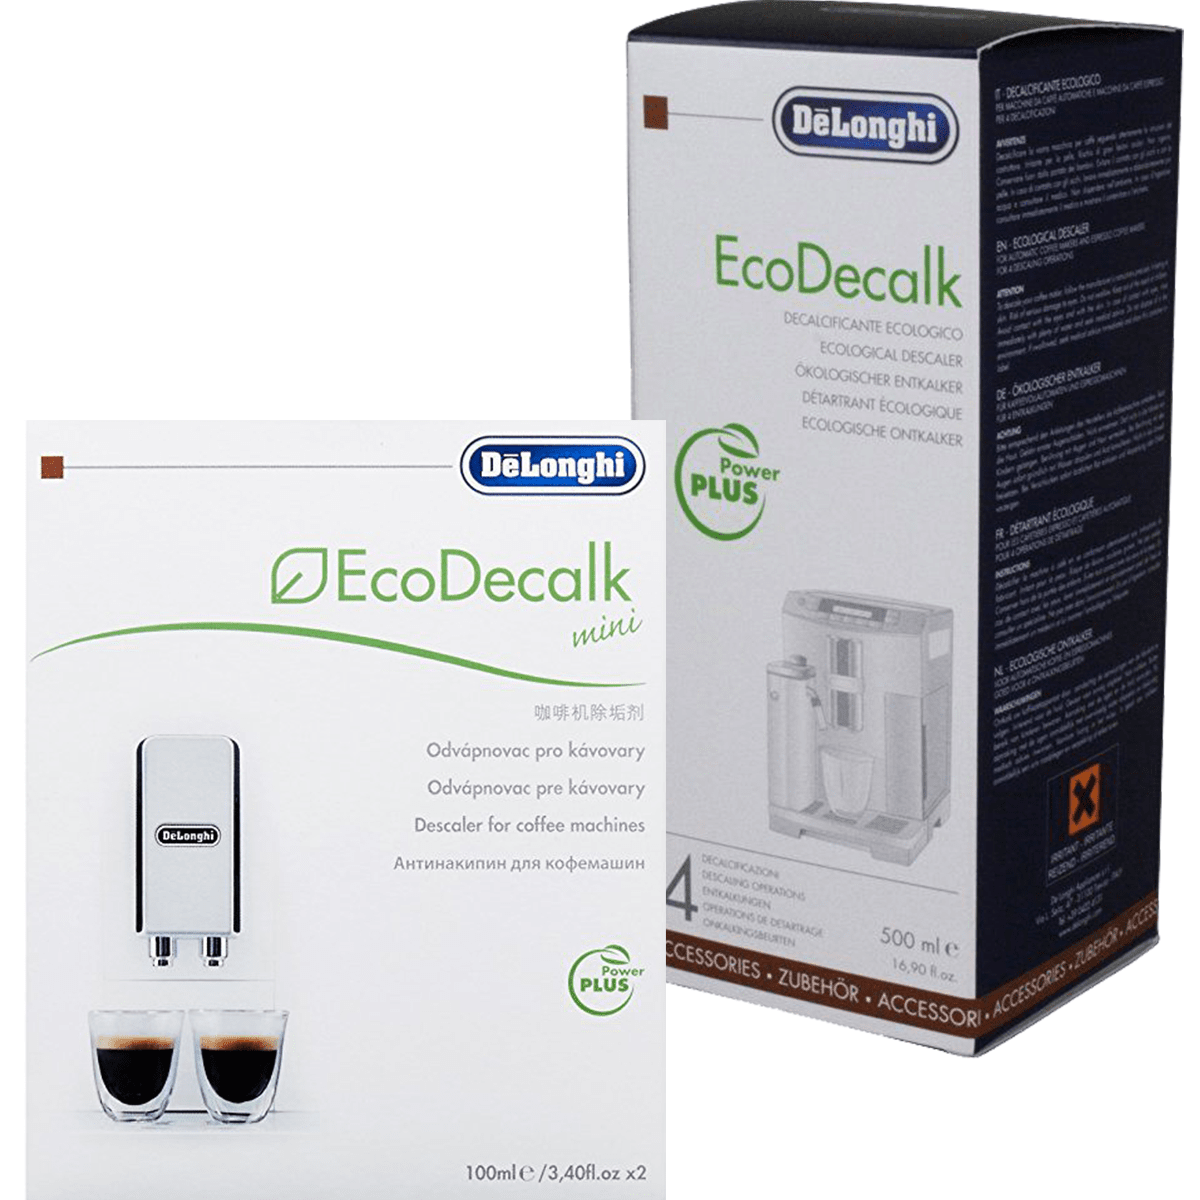 Delonghi Eco Decalk